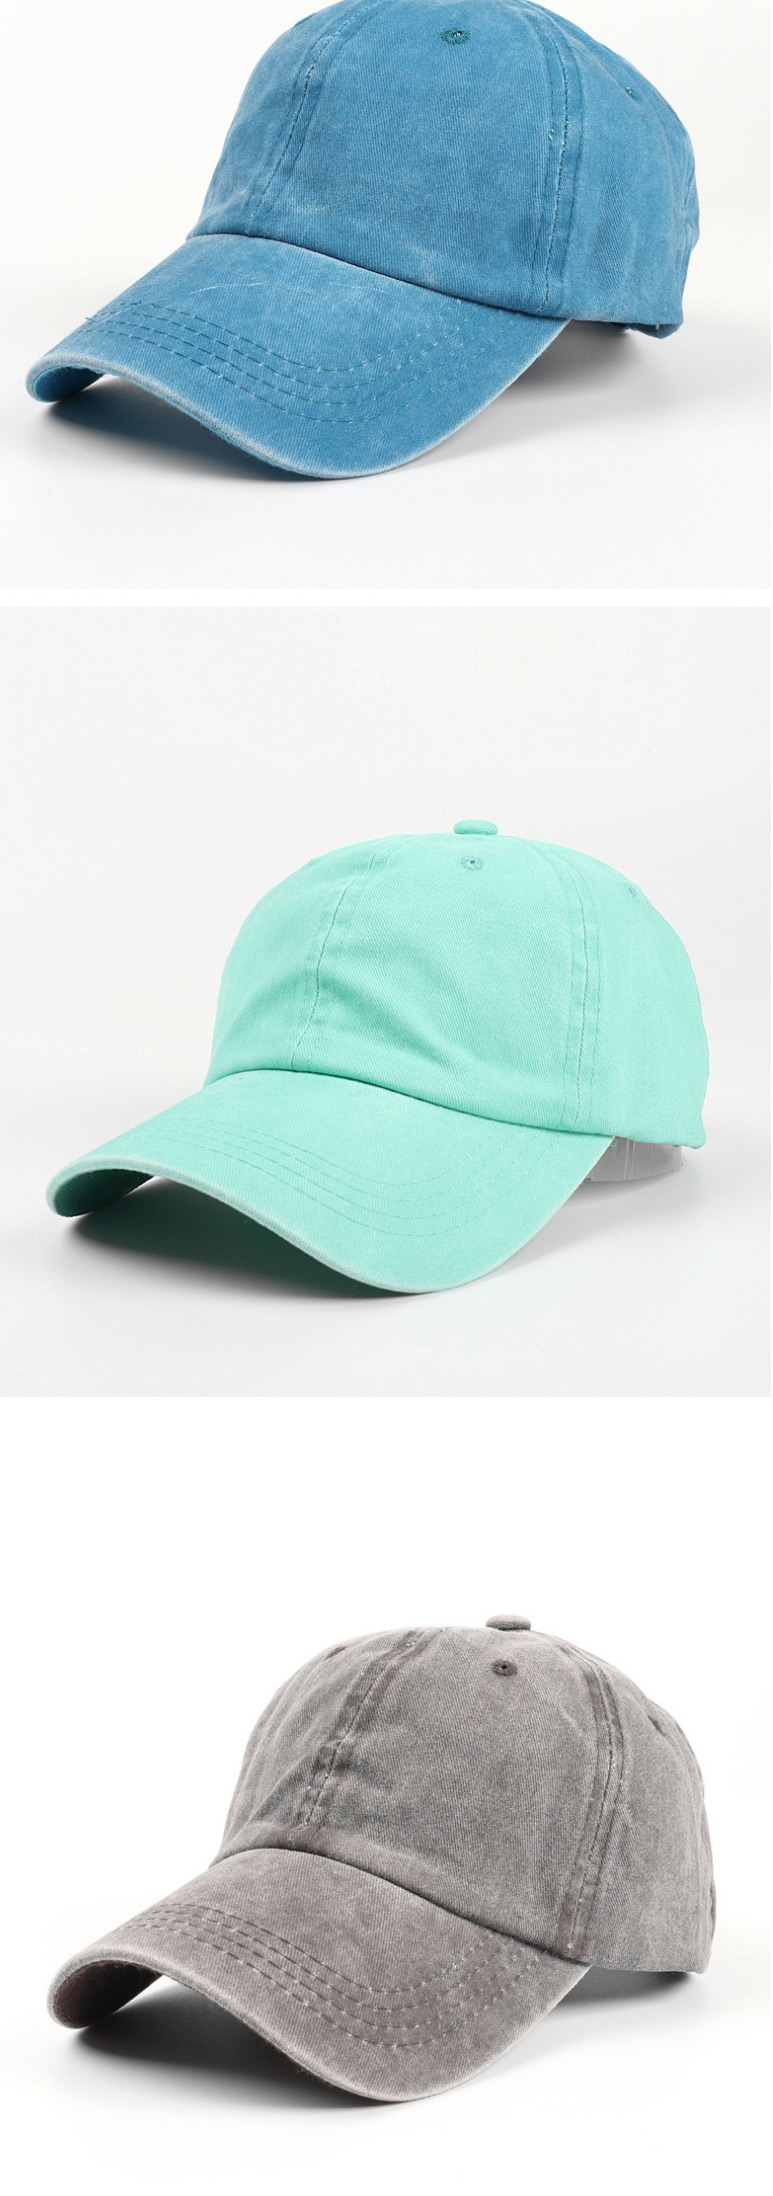 Fashion Dark Green Washed Distressed Denim Soft Top Curved Brim Cap,Baseball Caps